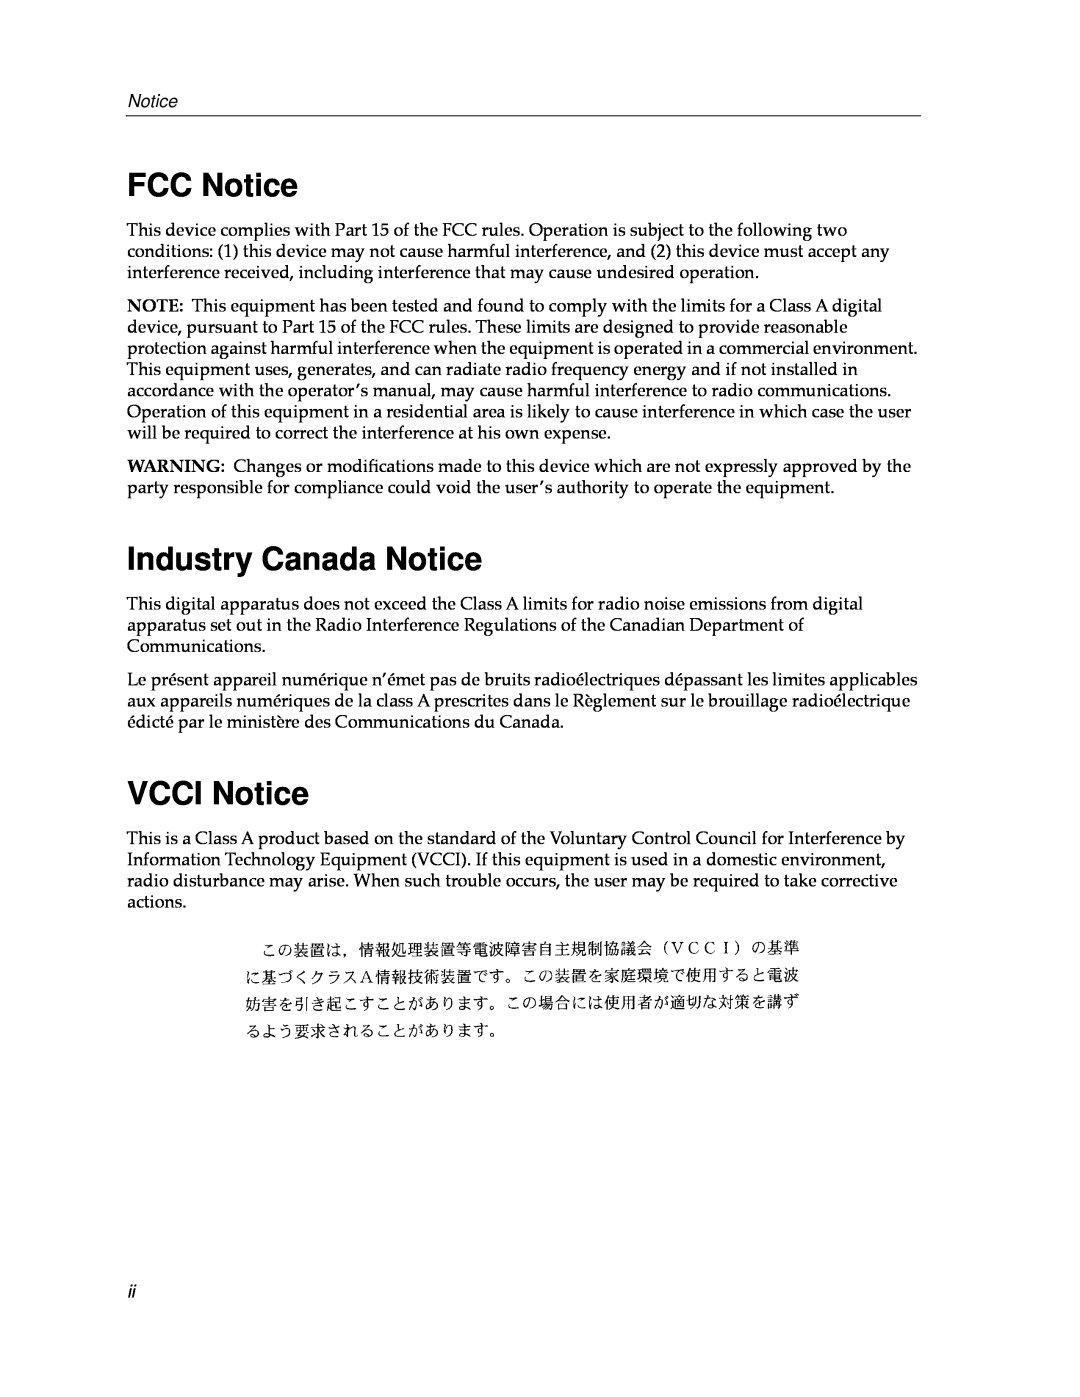 Cabletron Systems 9000 manual FCC Notice, Industry Canada Notice, VCCI Notice 